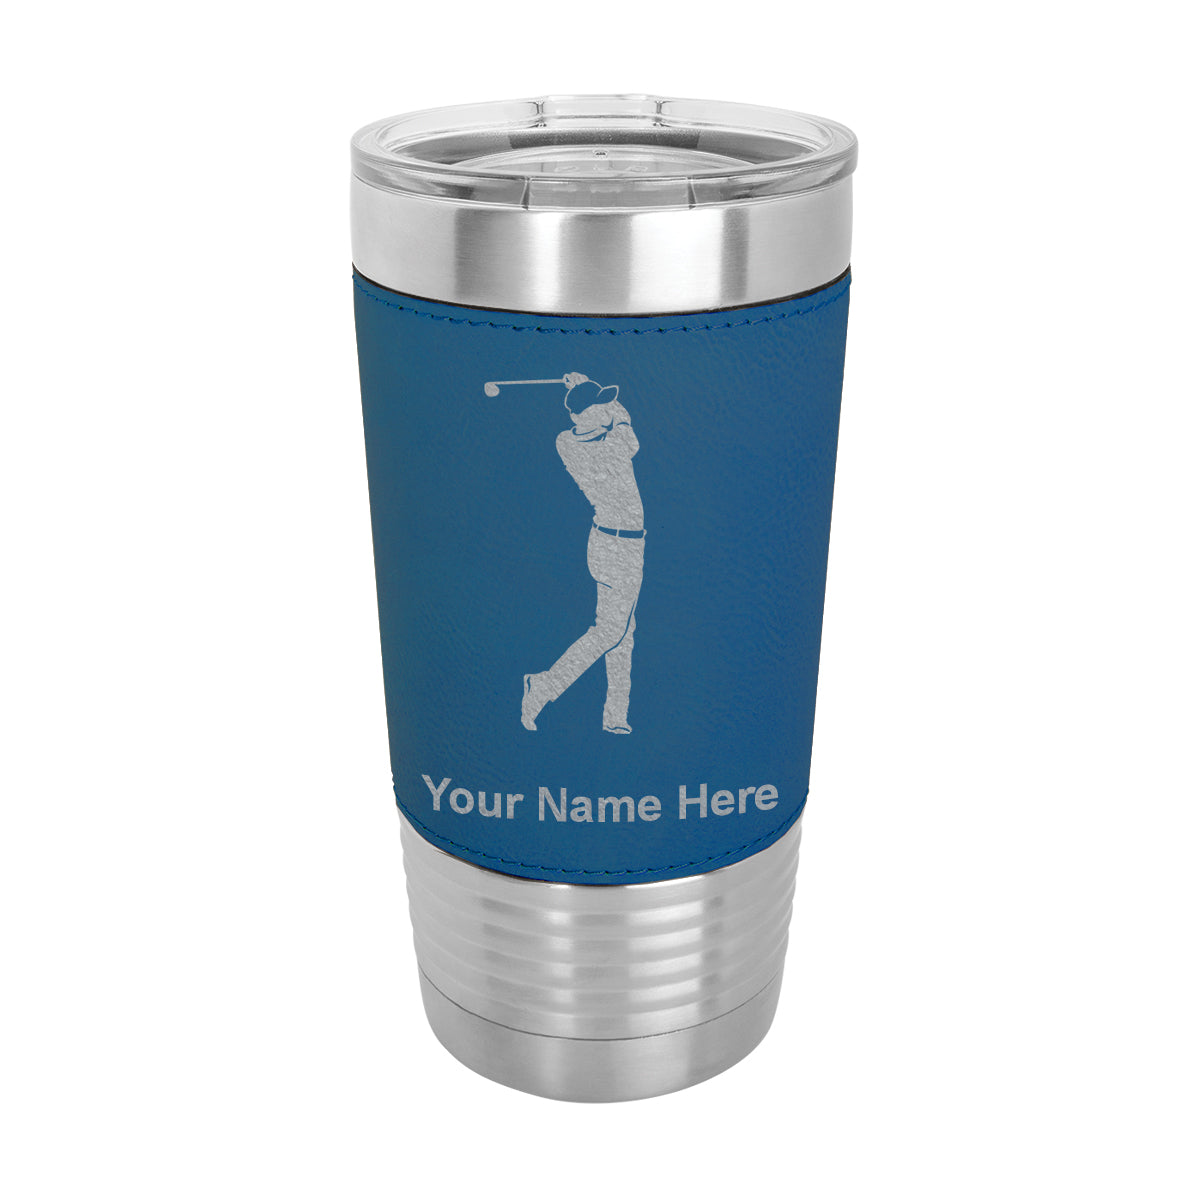 20oz Faux Leather Tumbler Mug, Golfer Golfing, Personalized Engraving Included - LaserGram Custom Engraved Gifts